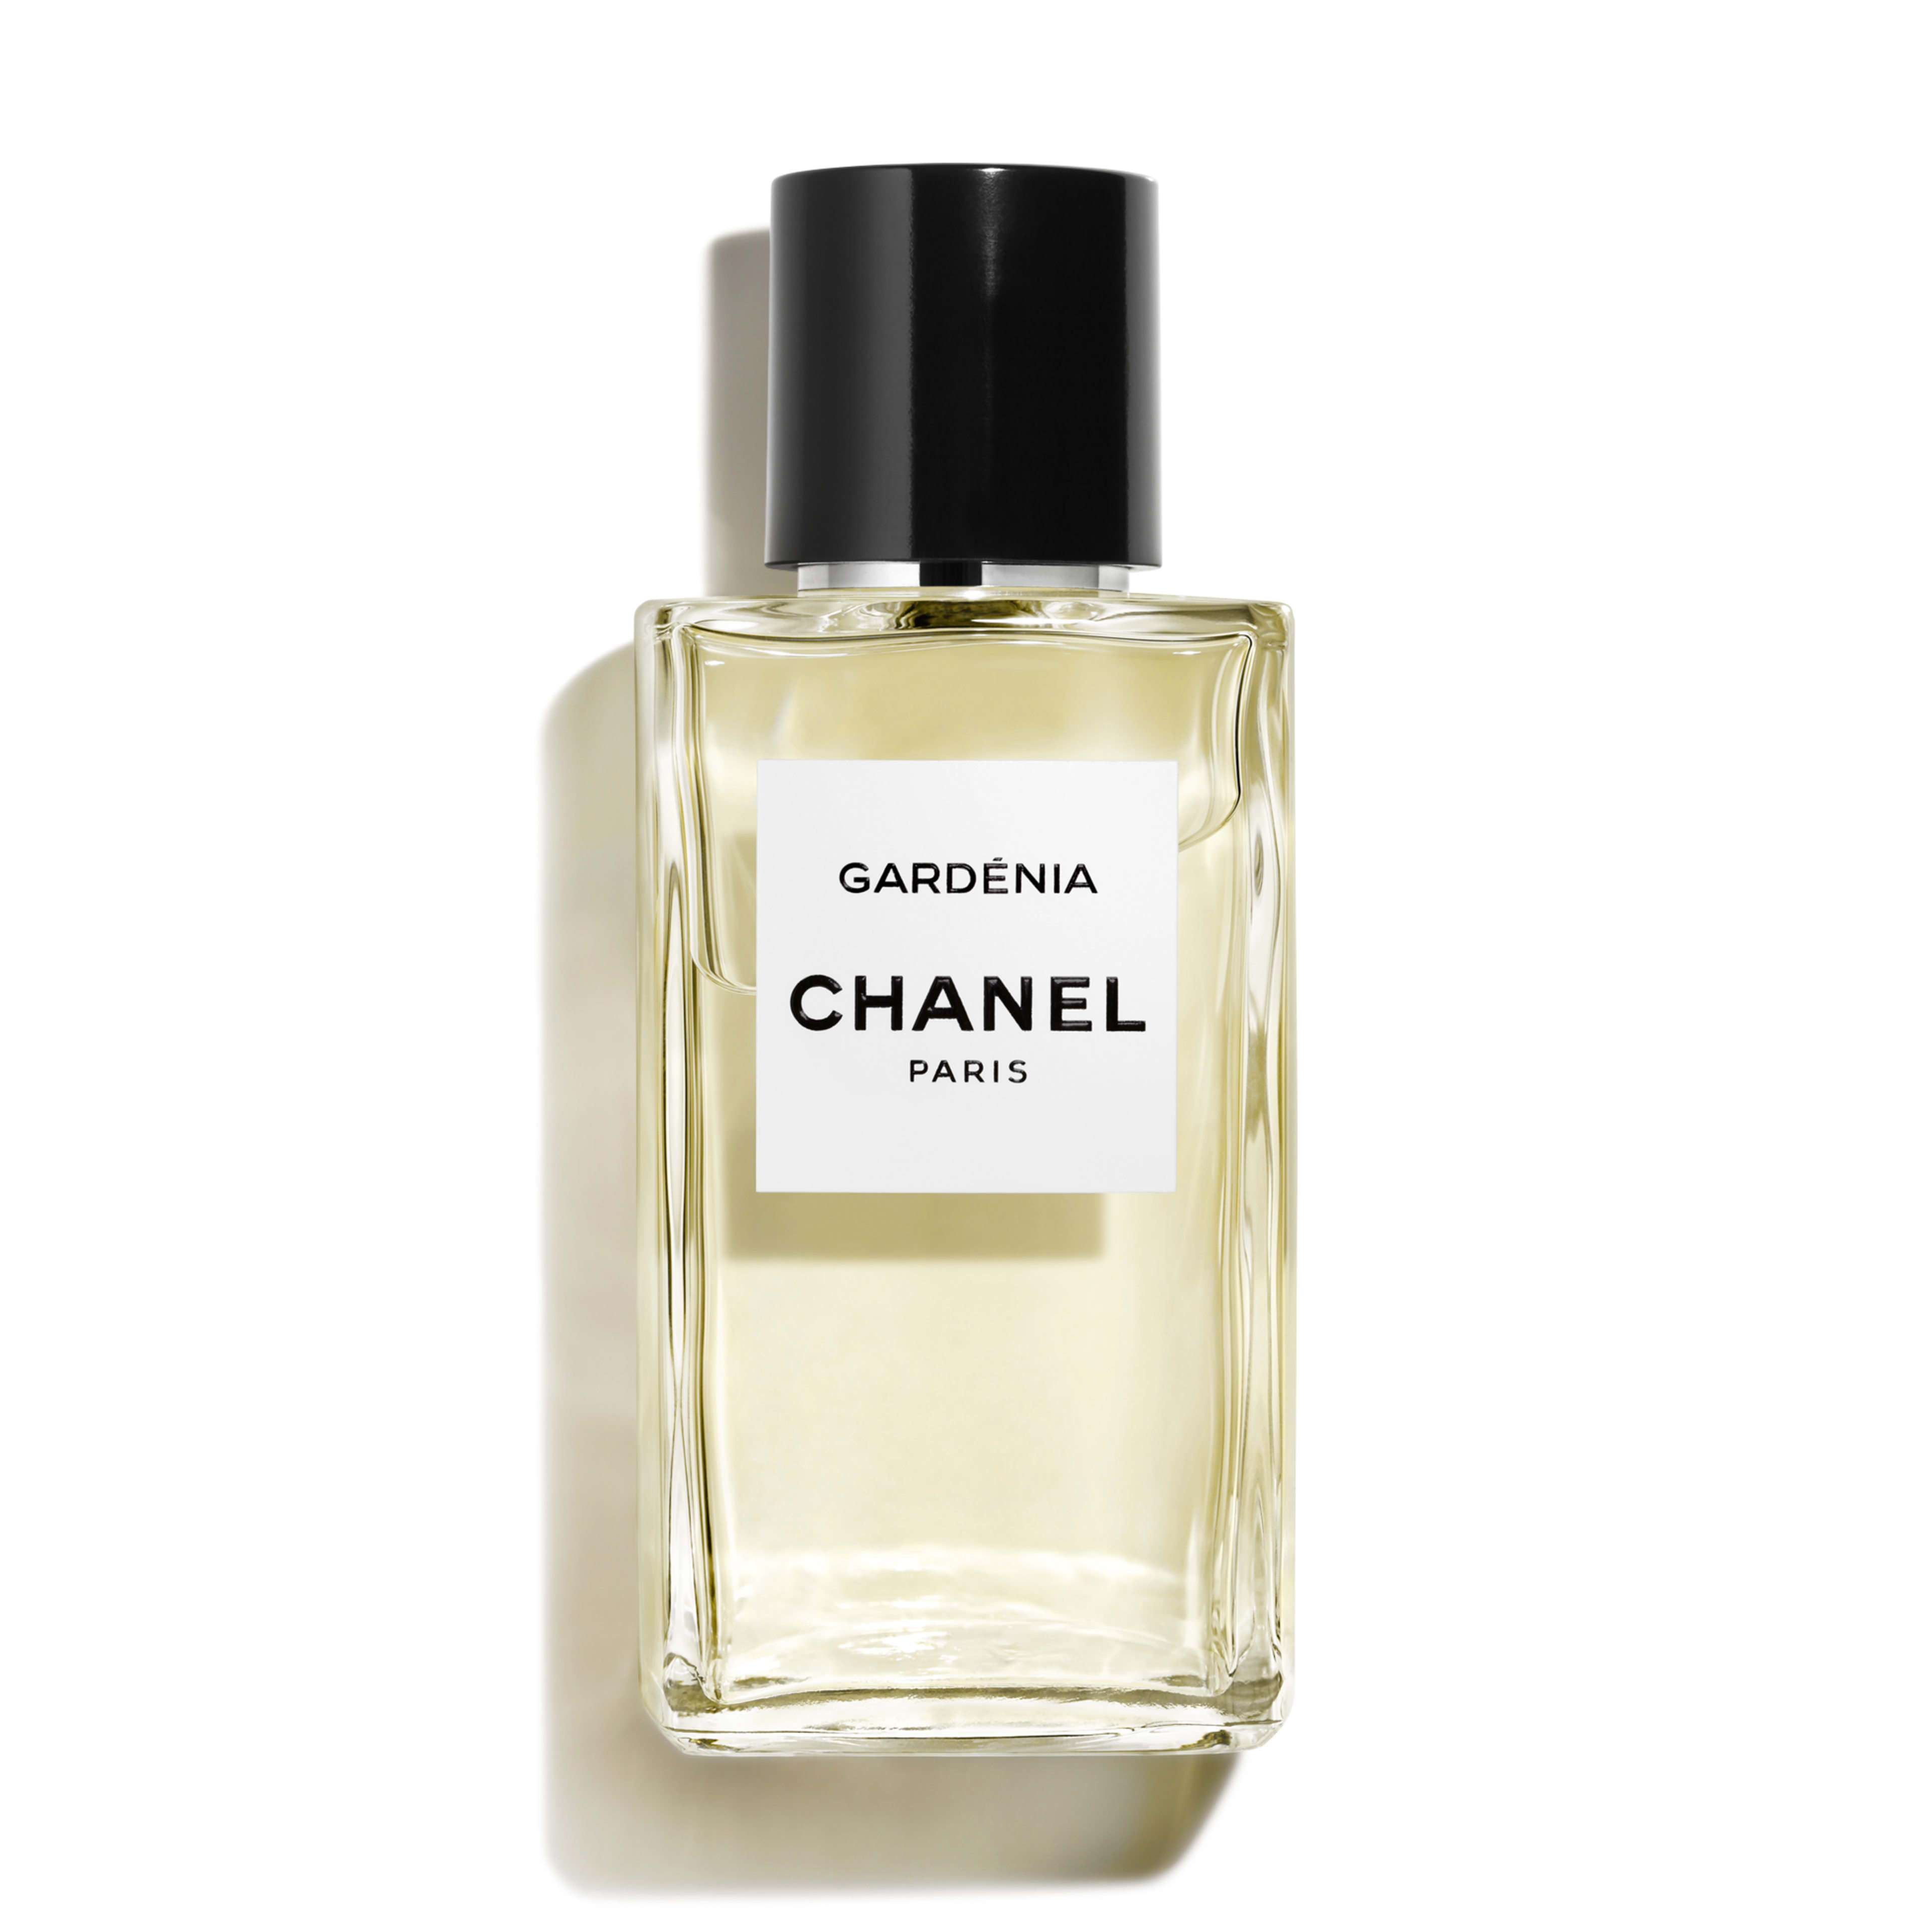 Chanel Gardenia Eau De Parfum